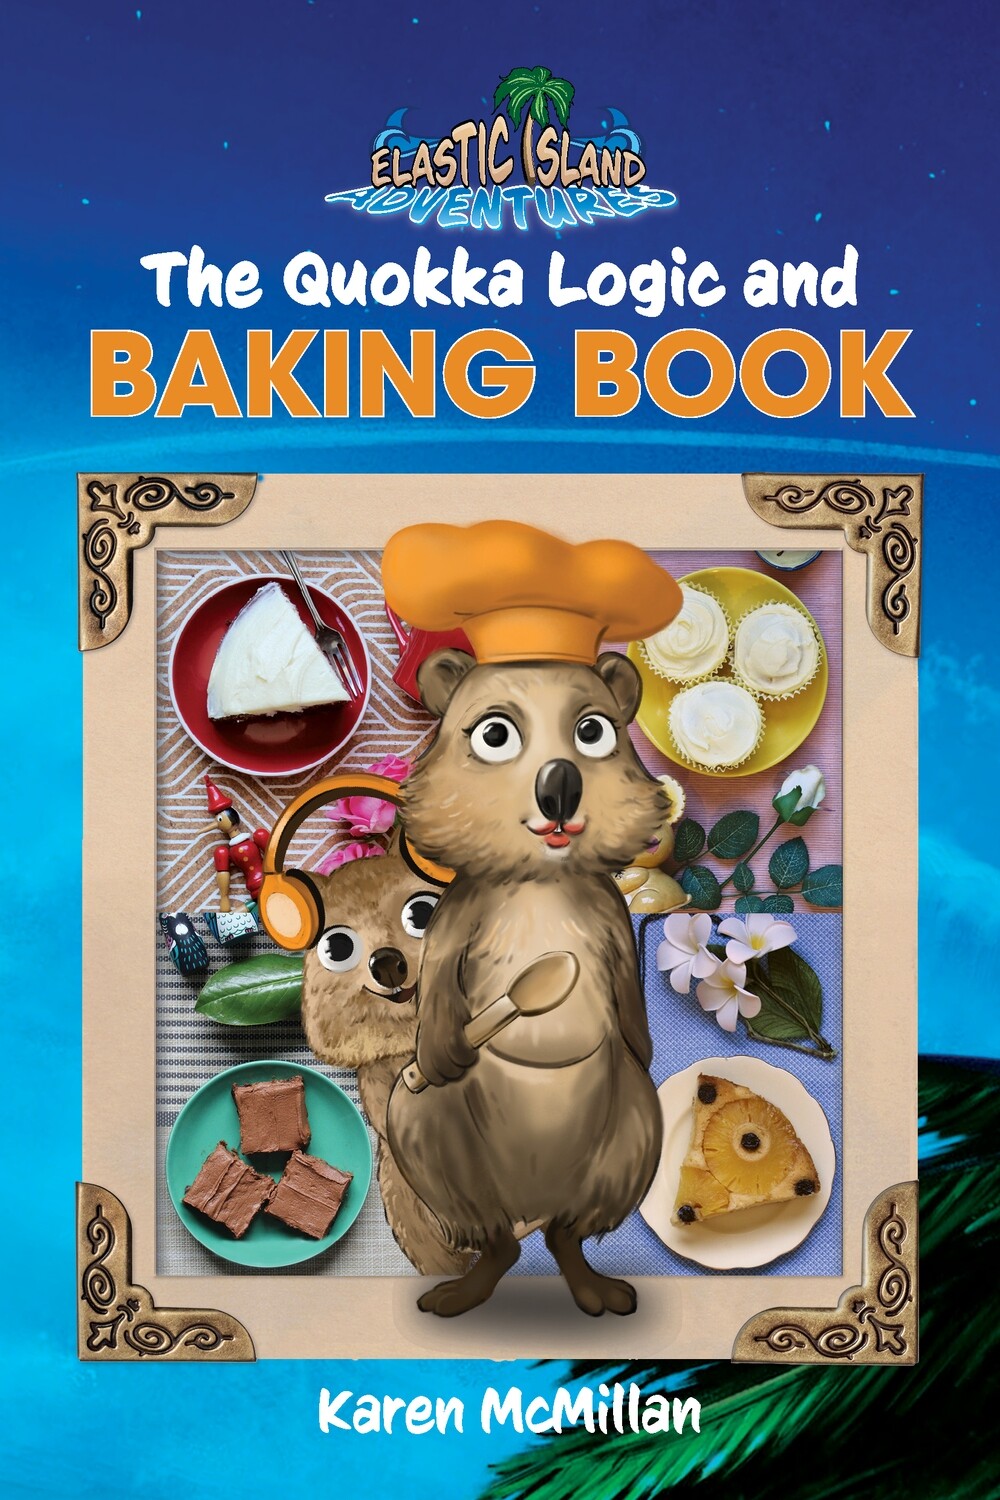 The Quokka Logic and Baking Book